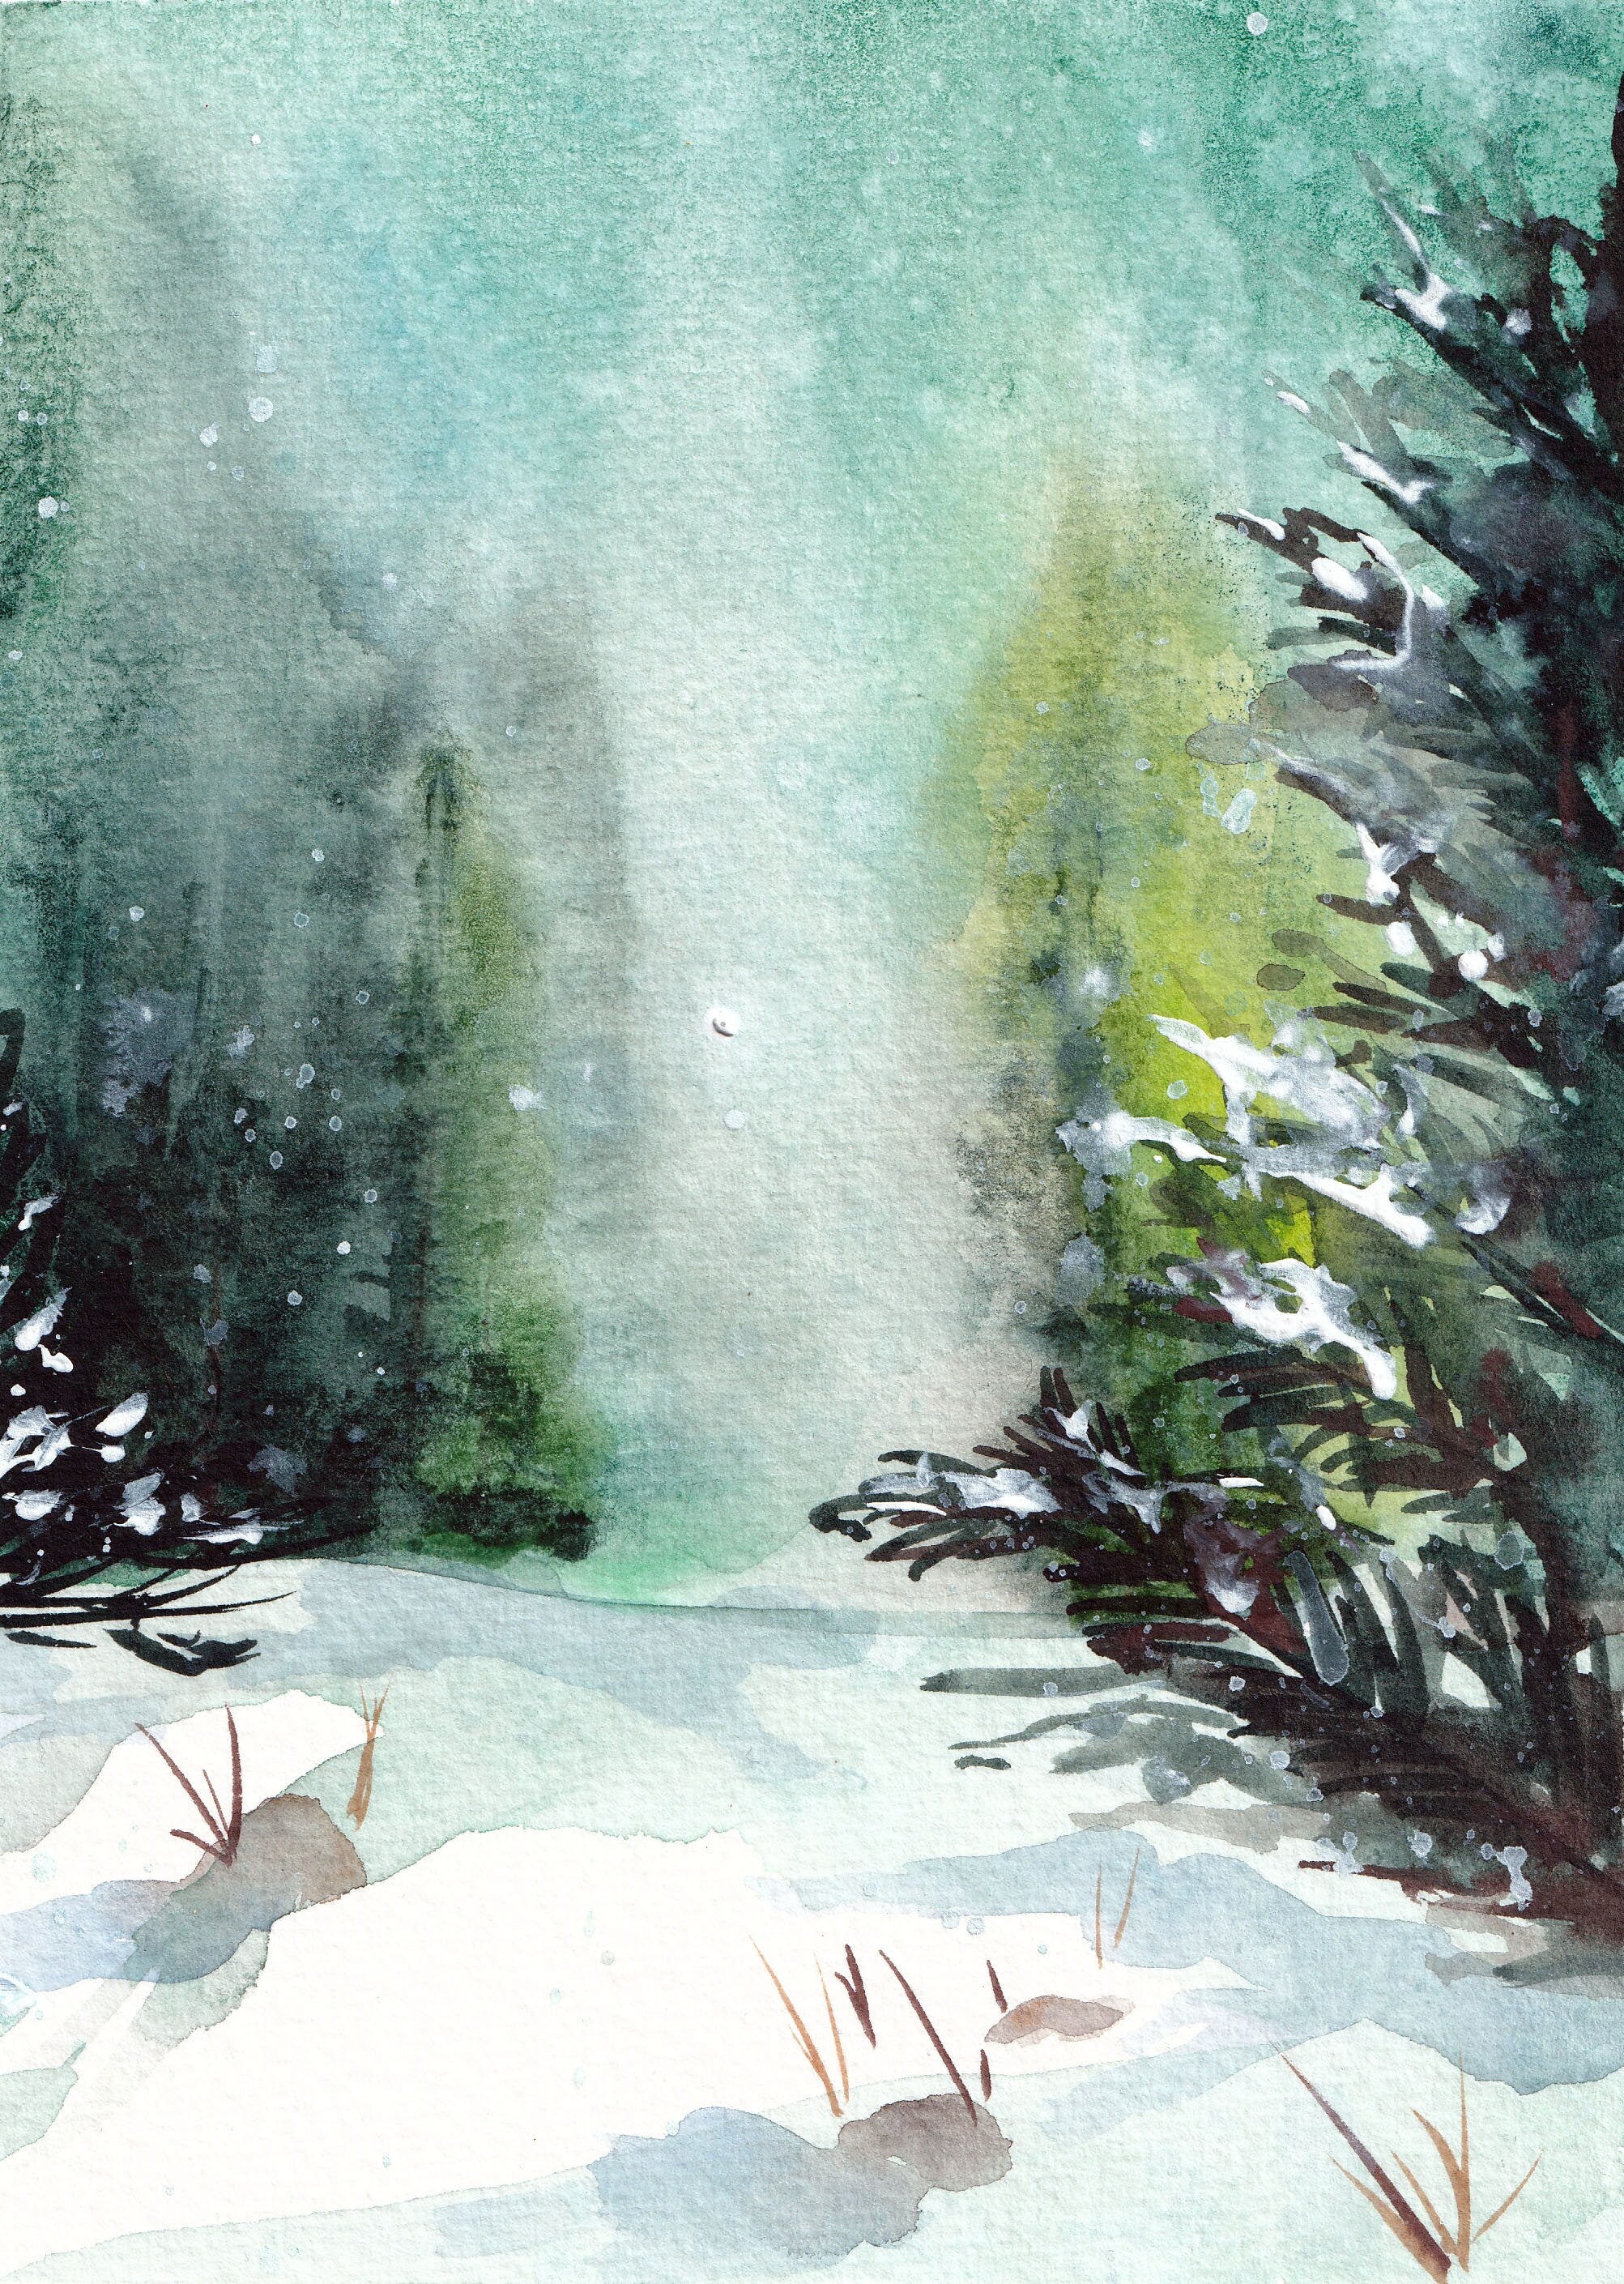 Snowy Landscape, Nature Wall art, Medjool Studio Painting.